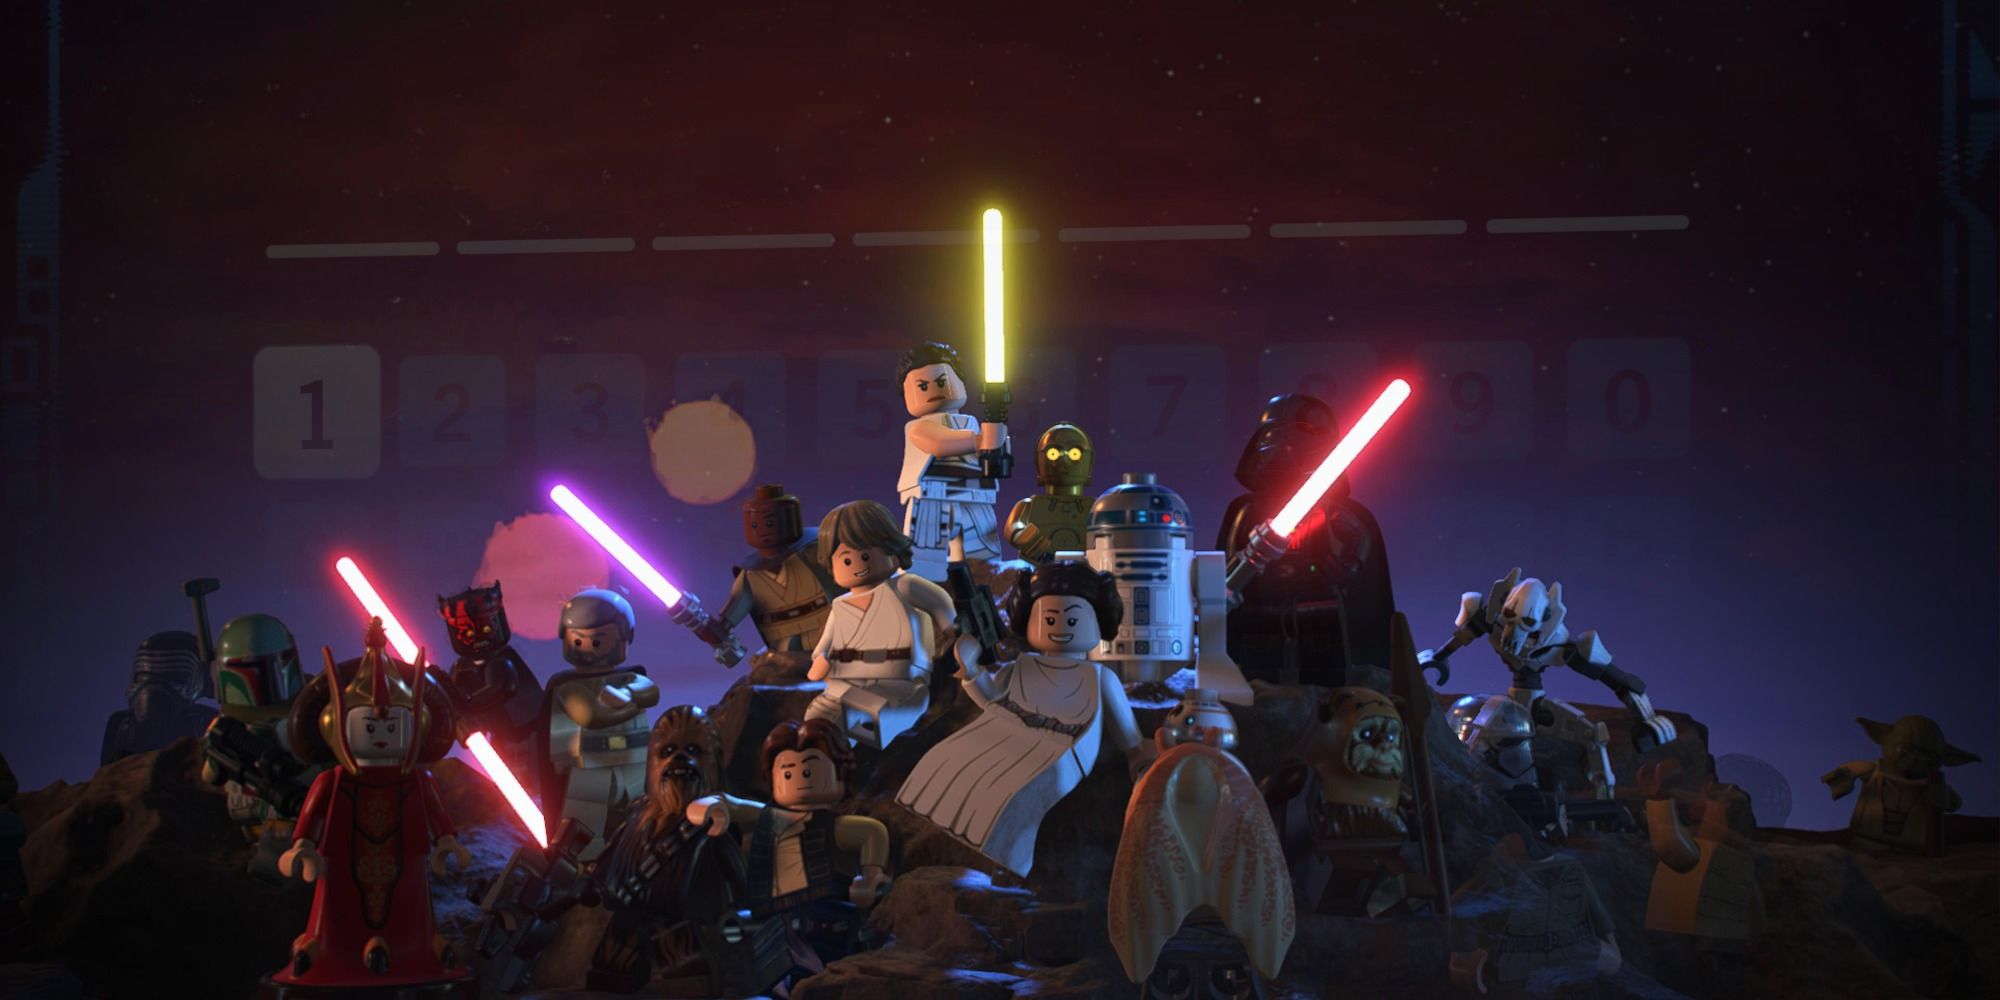 Lego Star Wars: The Skywalker Saga codes